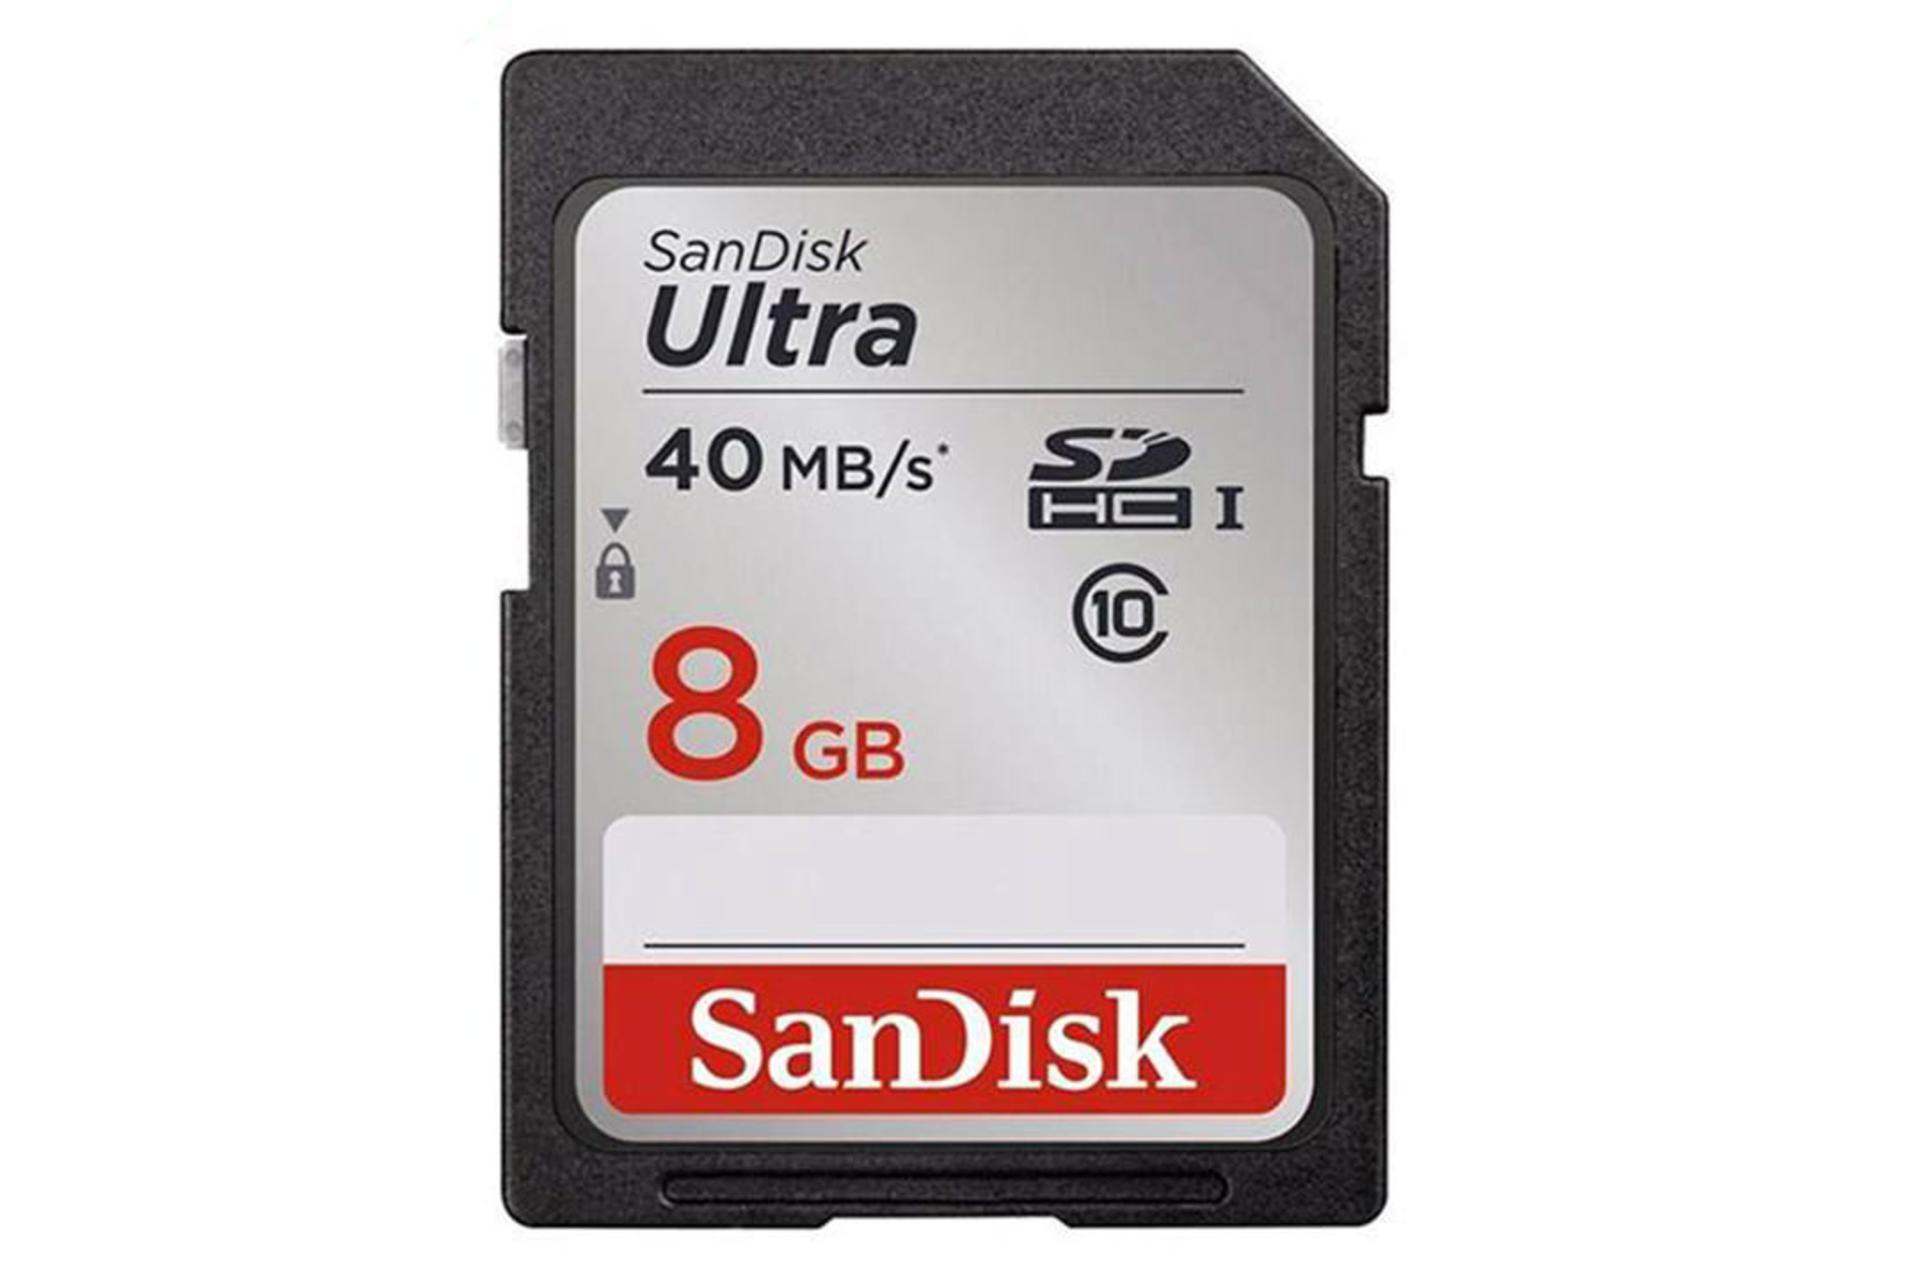 SanDisk Ultra microSDHC Class 10 UHS-I U1 8GB